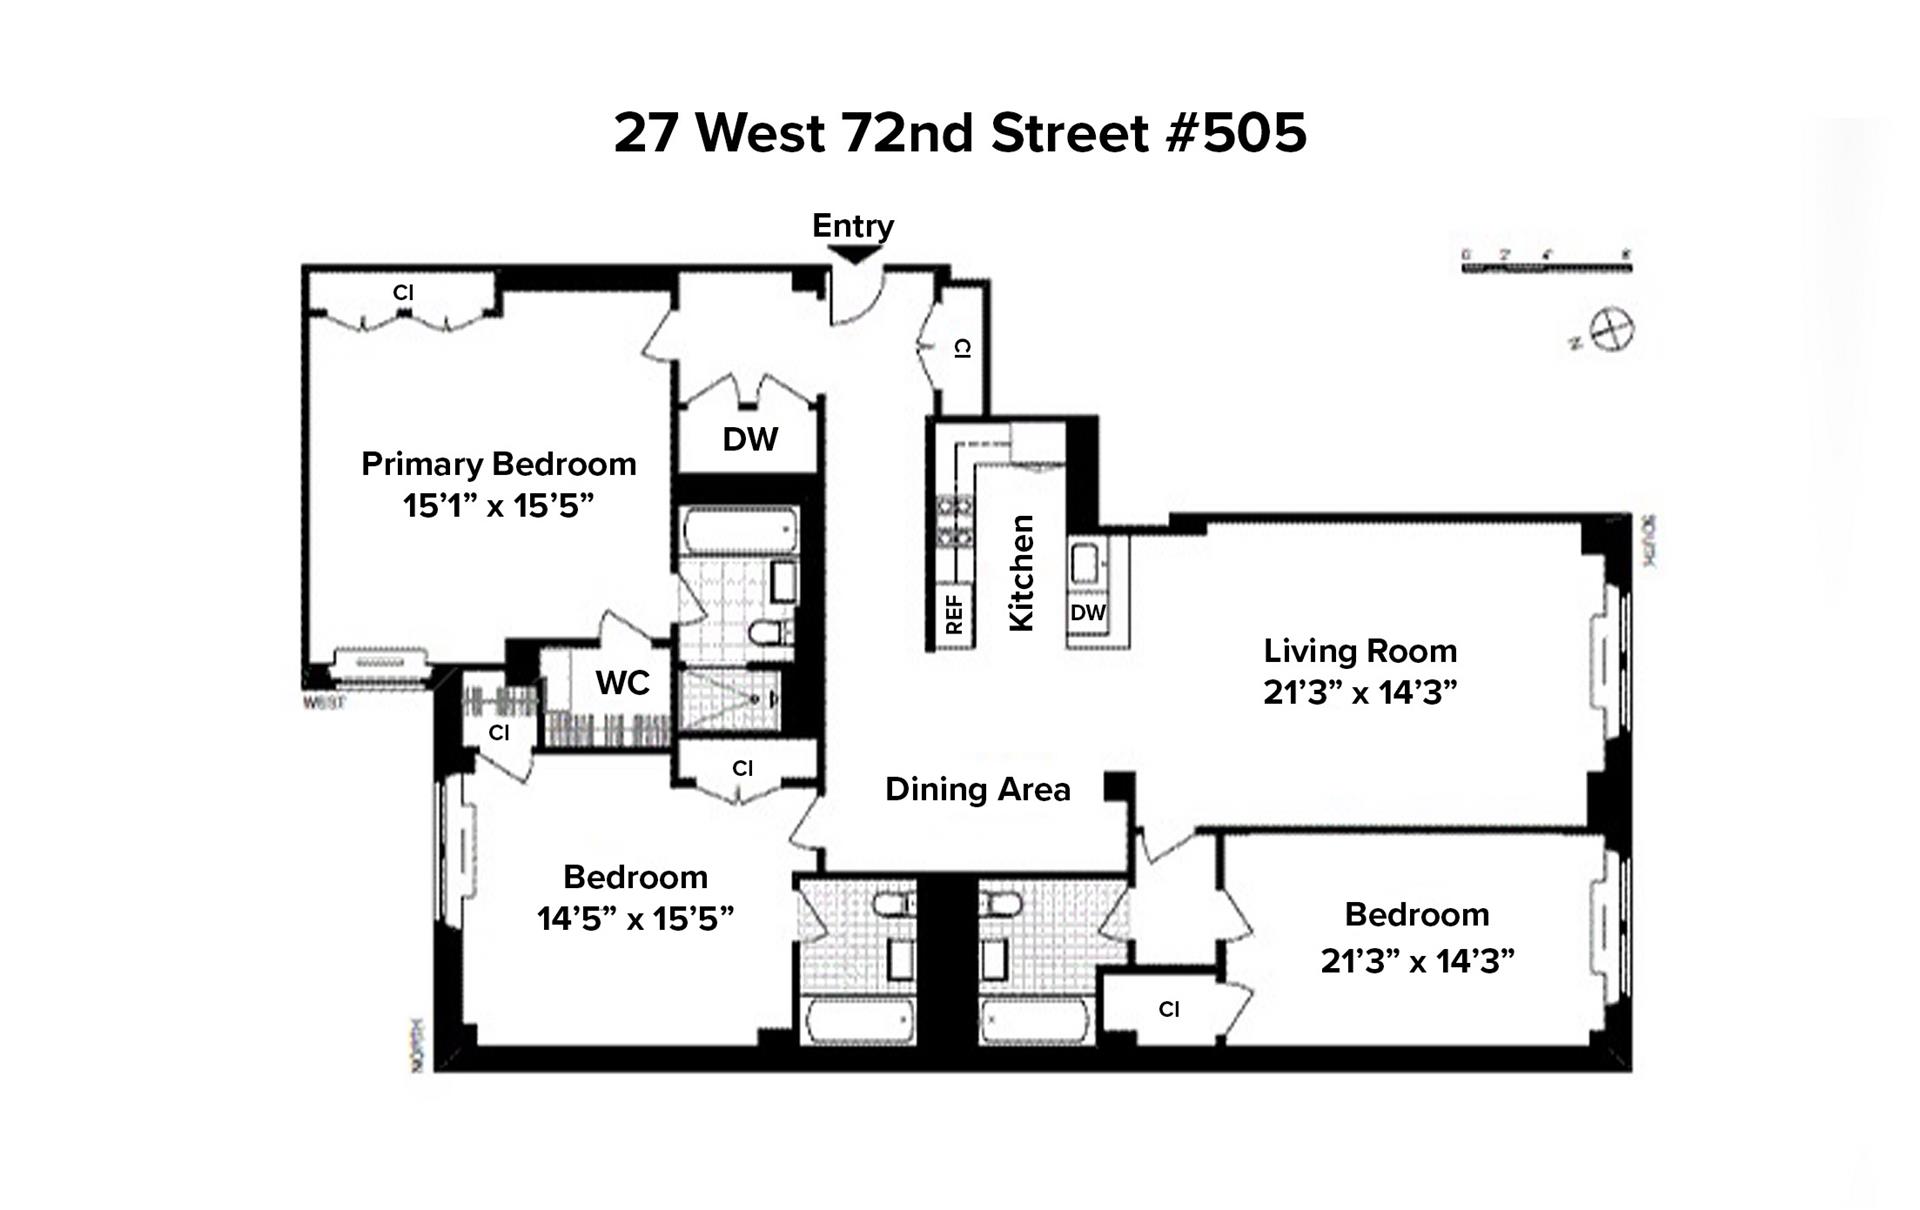 Floorplan for 27 West 72nd Street, 505